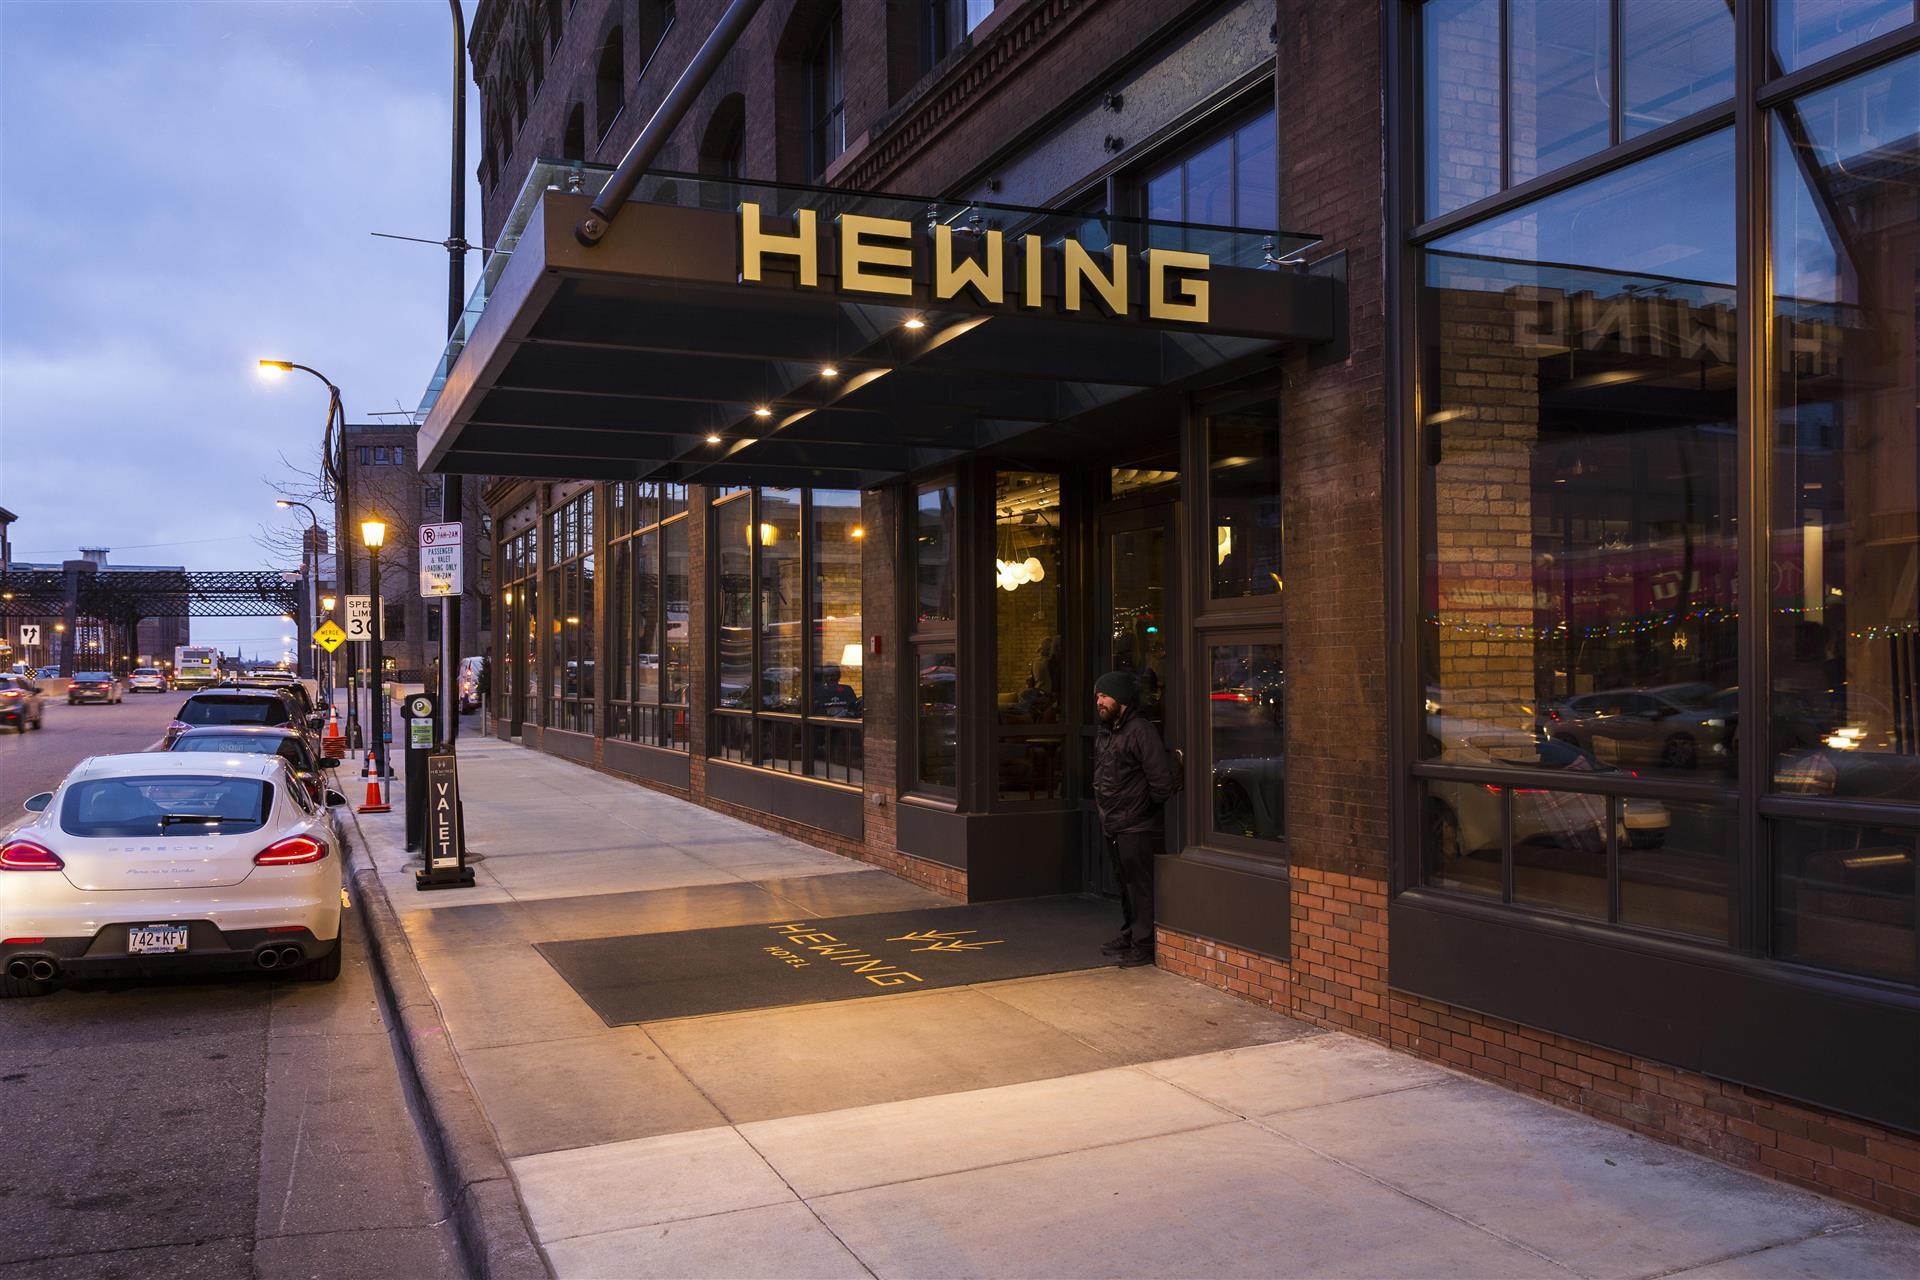 Hewing Hotel in Minneapolis, MN